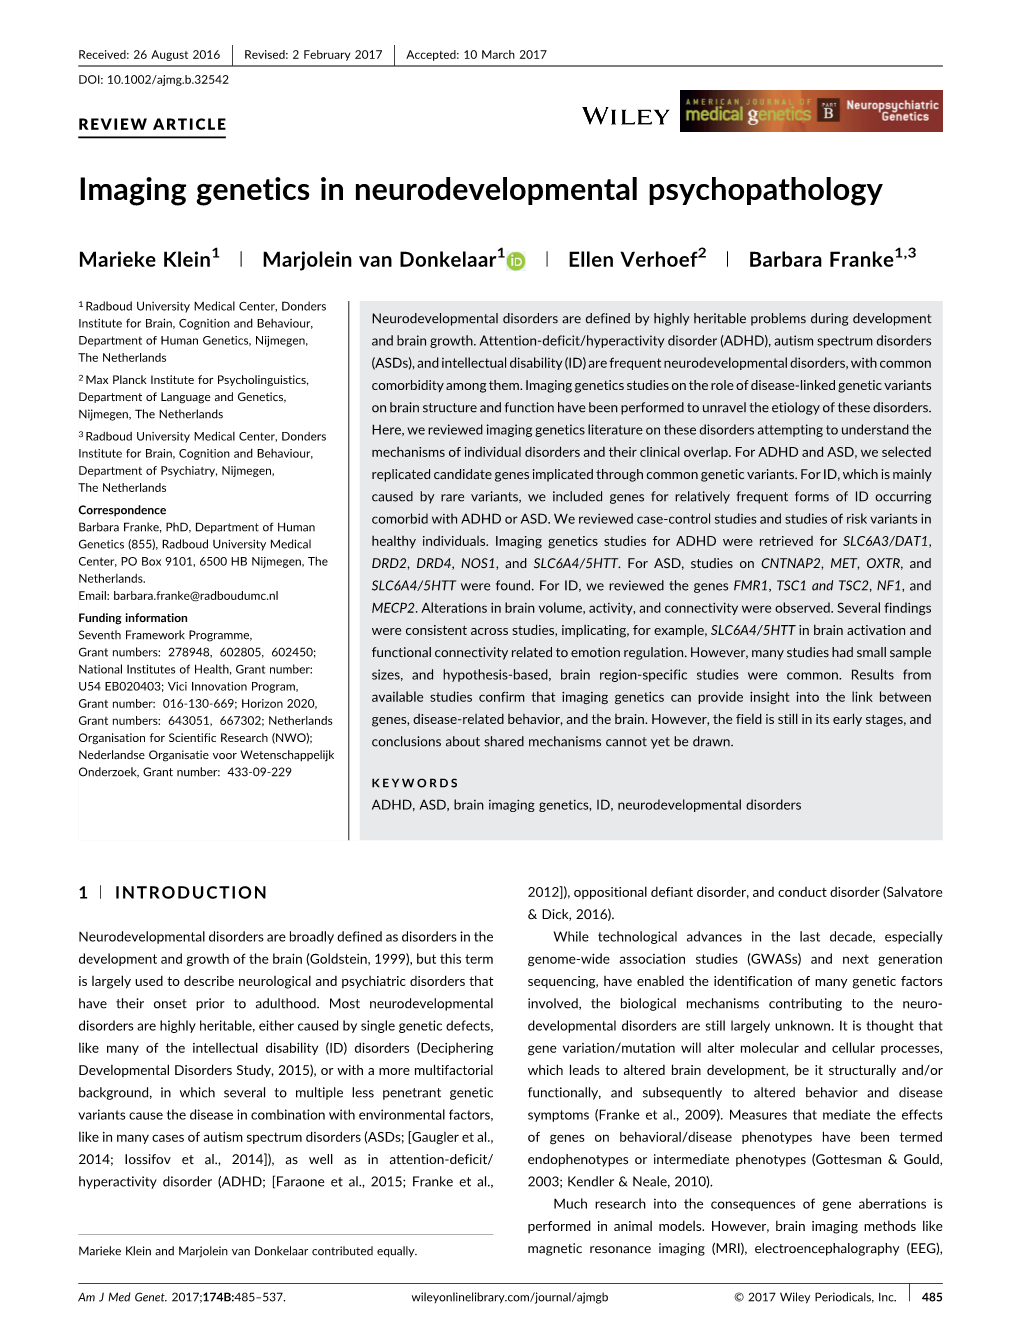 Imaging Genetics in Neurodevelopmental Psychopathology